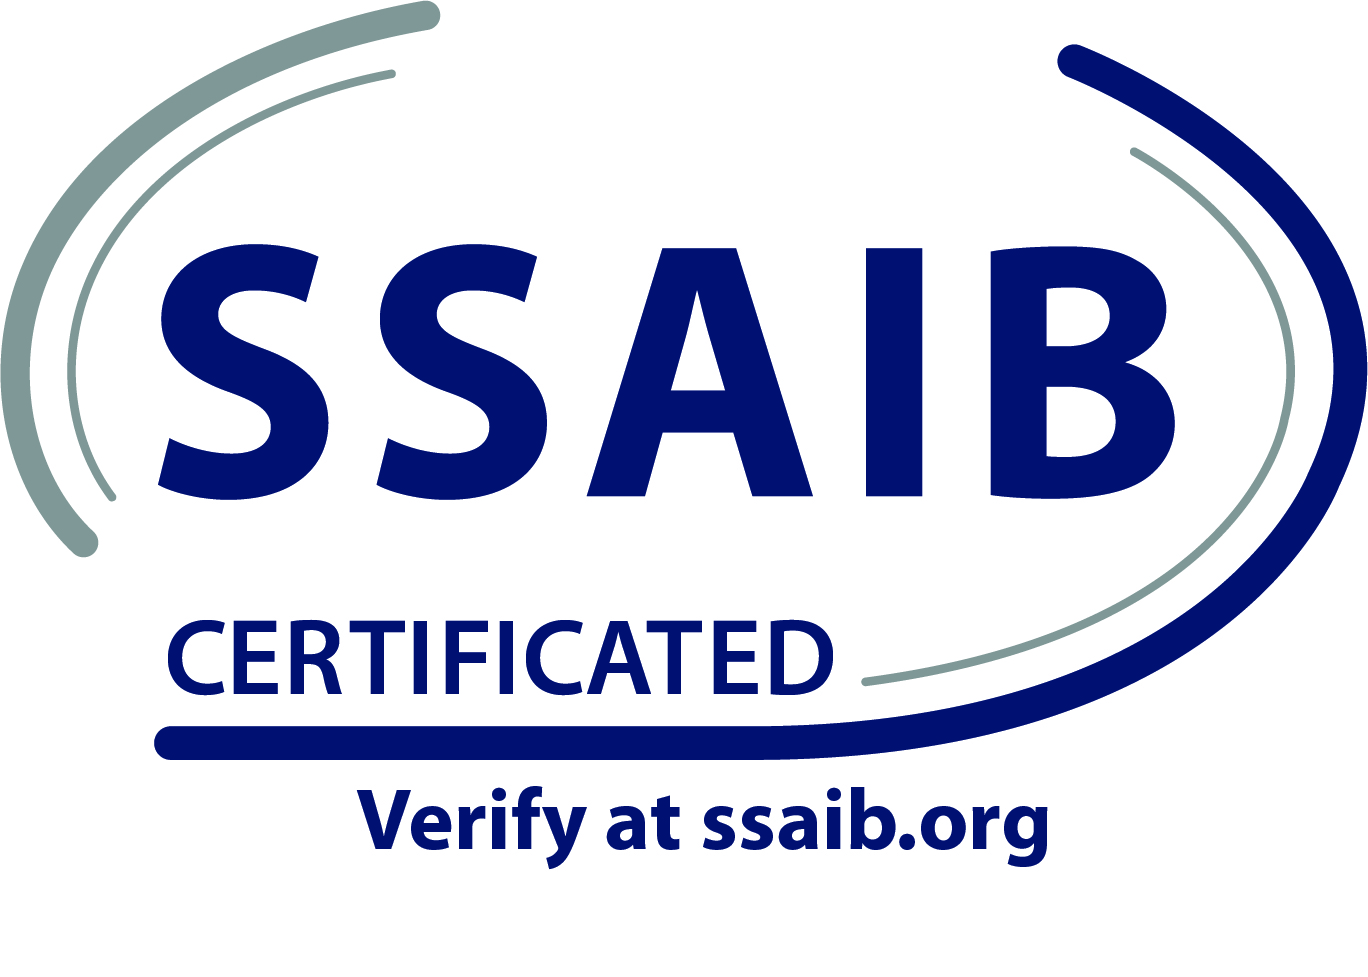 Ssaib Certified